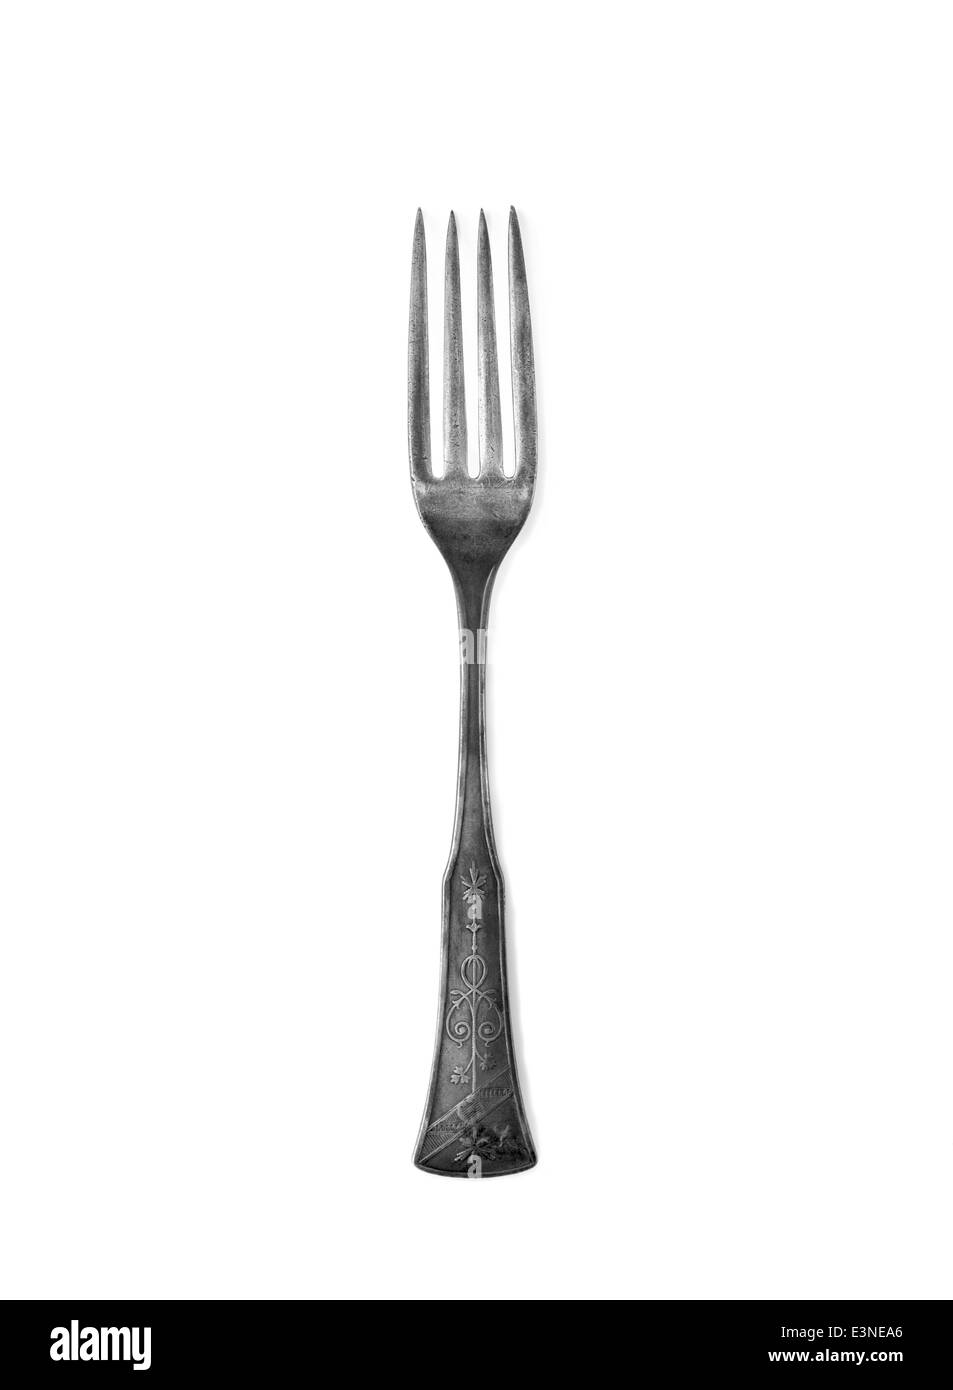 Old vintage kitchen fork on a white background Stock Photo